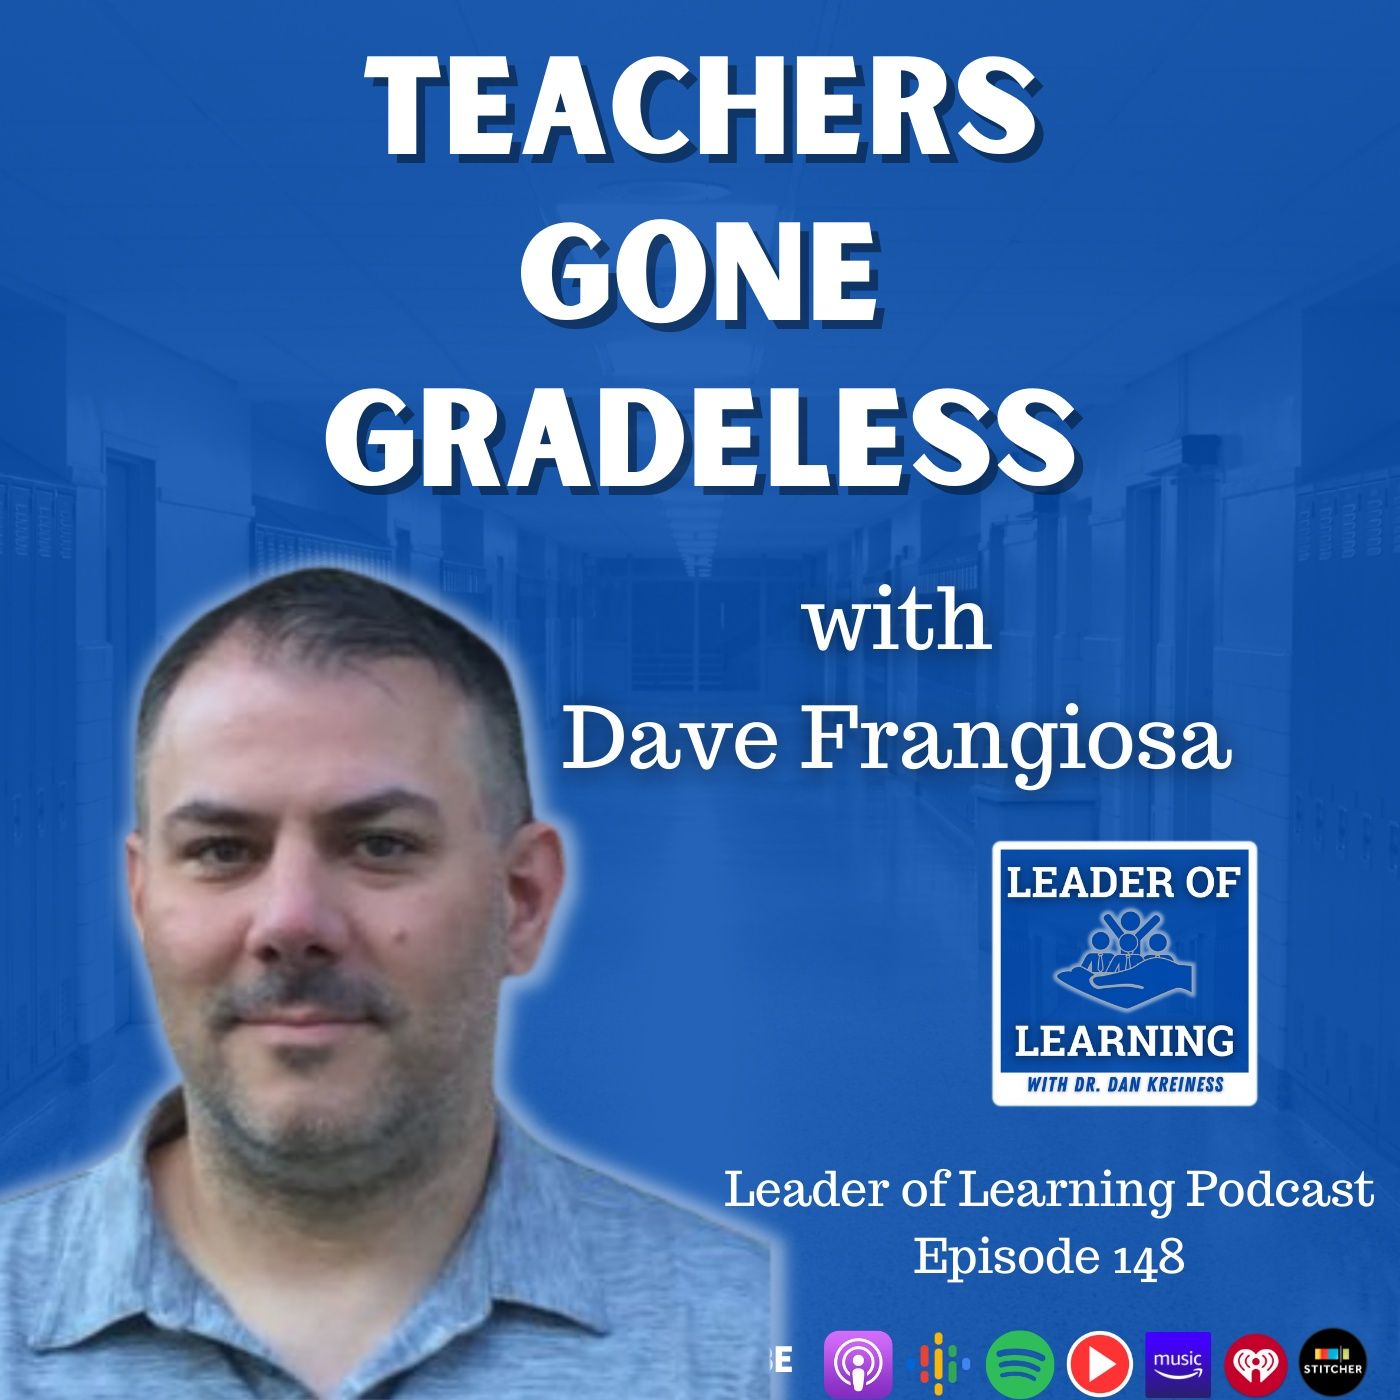 Teacher Gone Gradeless with Dave Frangiosa Image